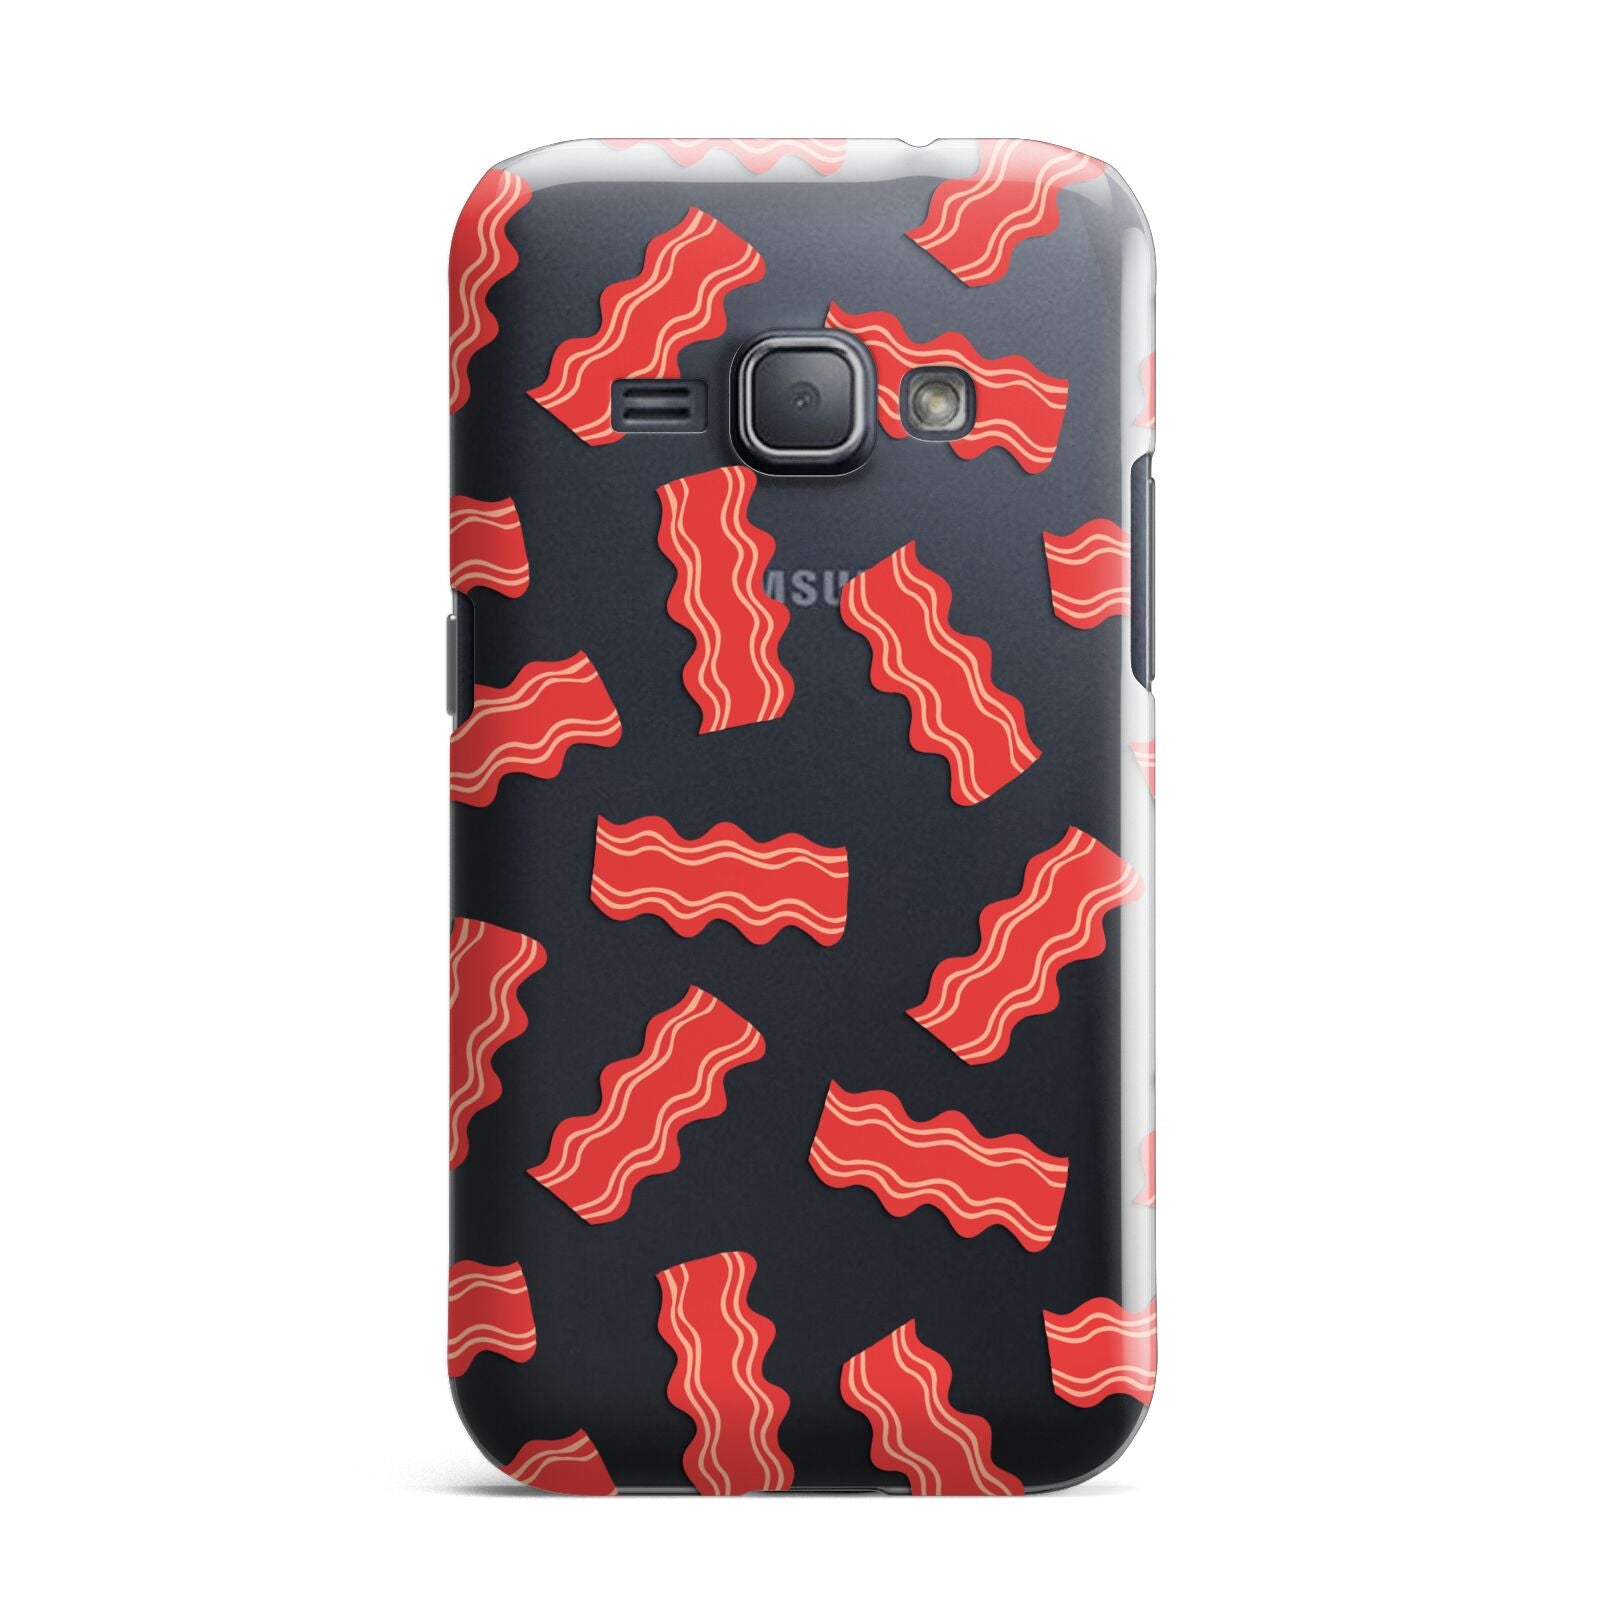 Bacon Samsung Galaxy J1 2016 Case